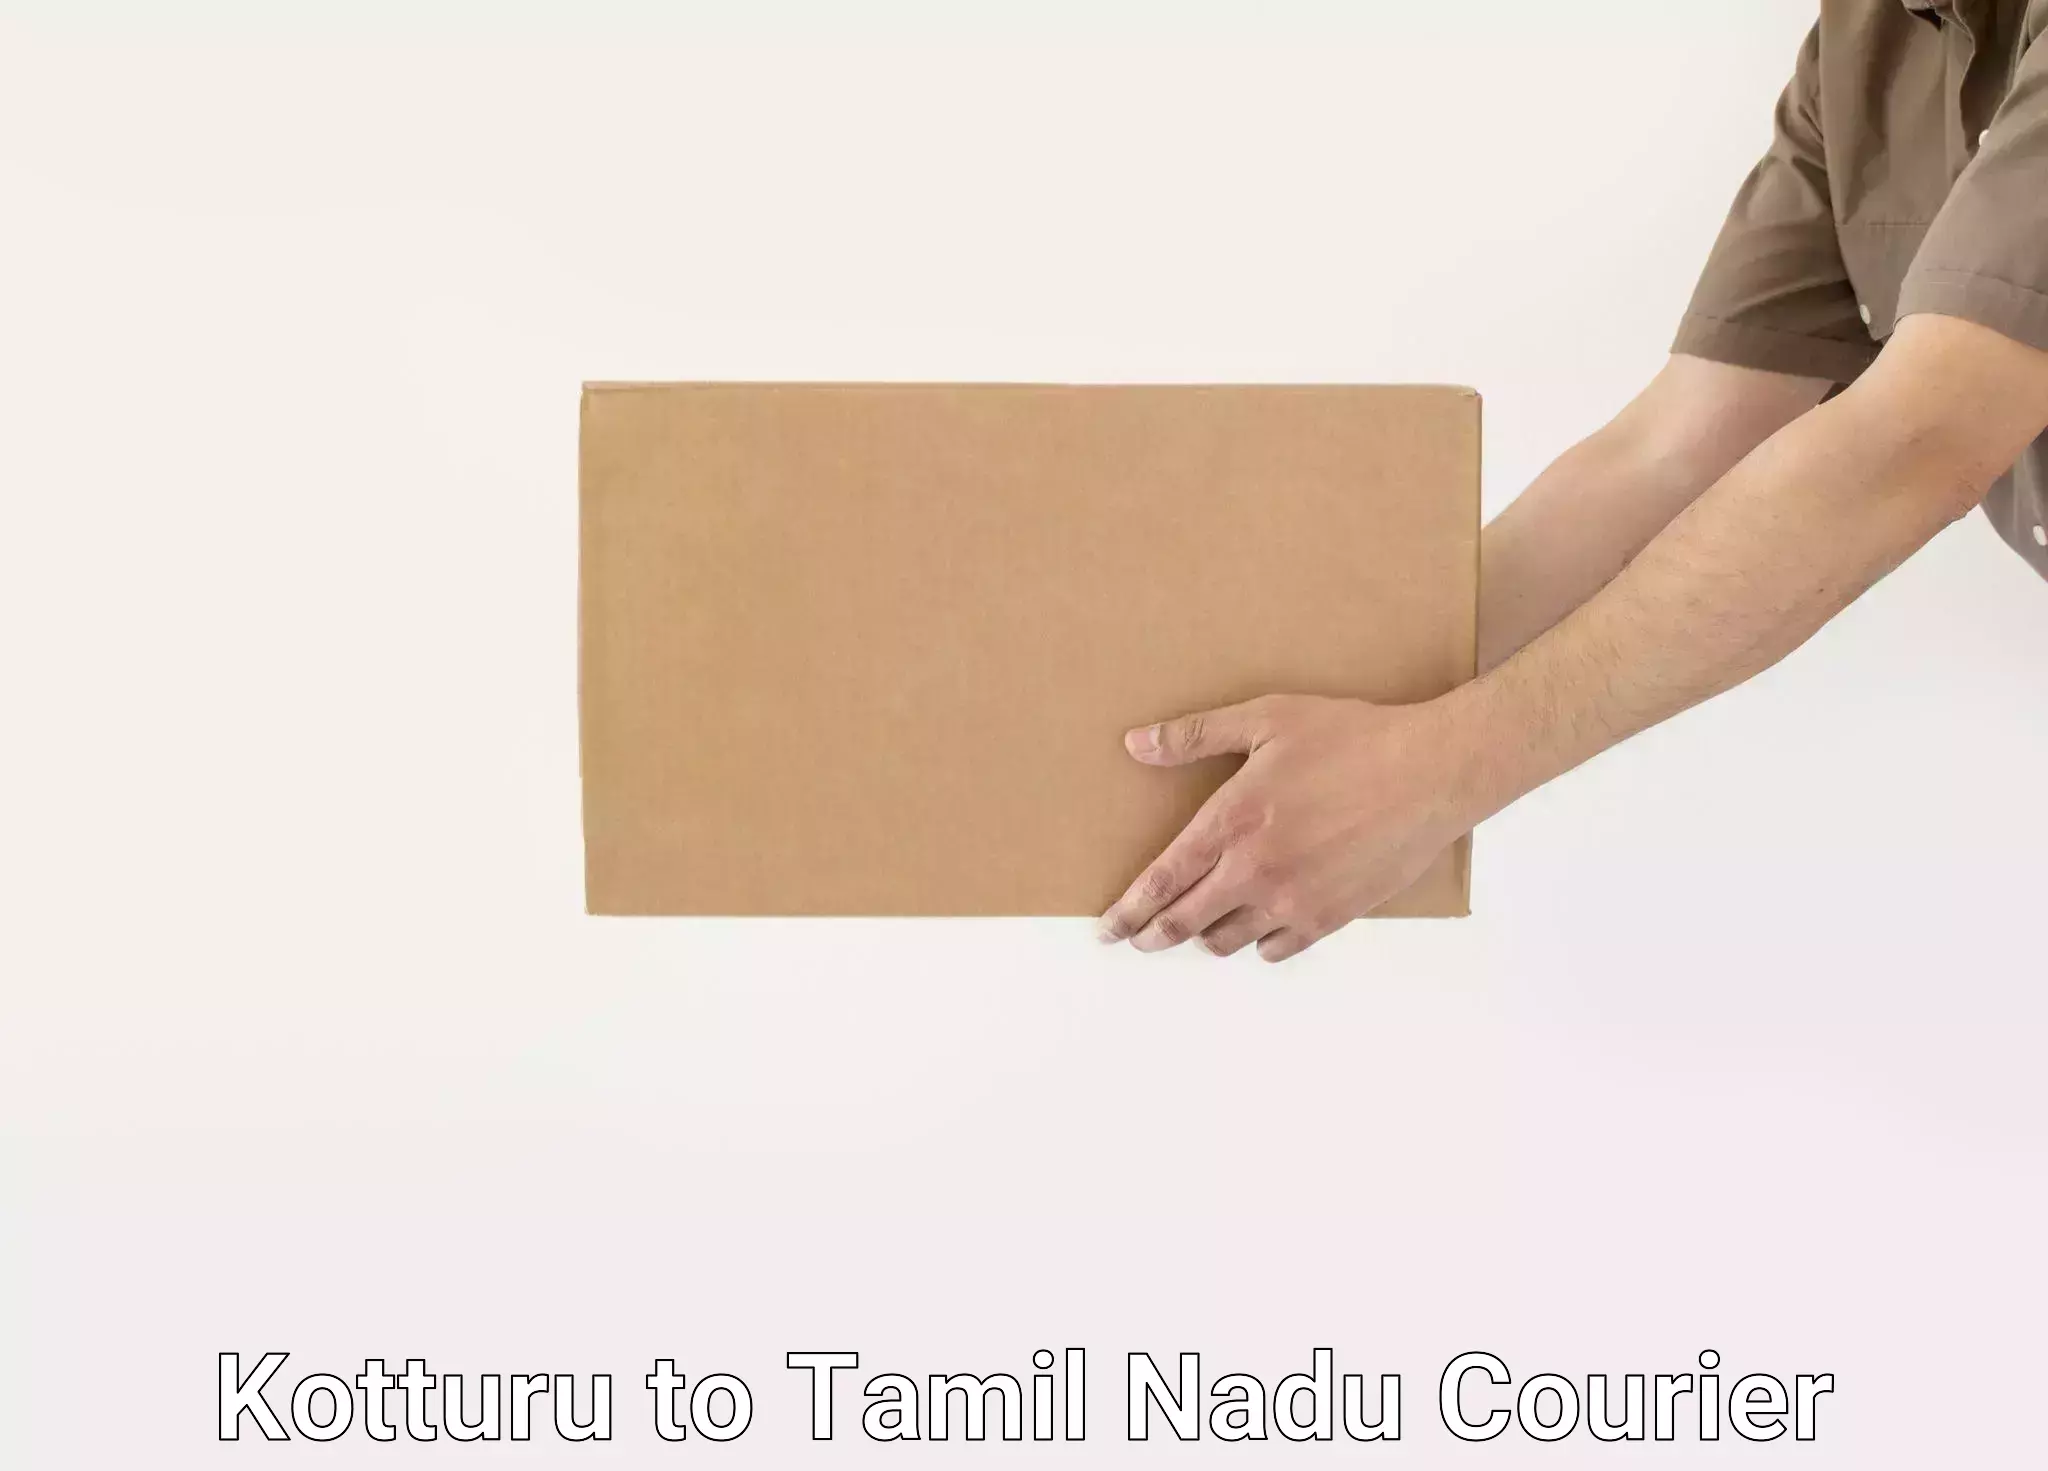 Personalized relocation plans Kotturu to Tamil Nadu